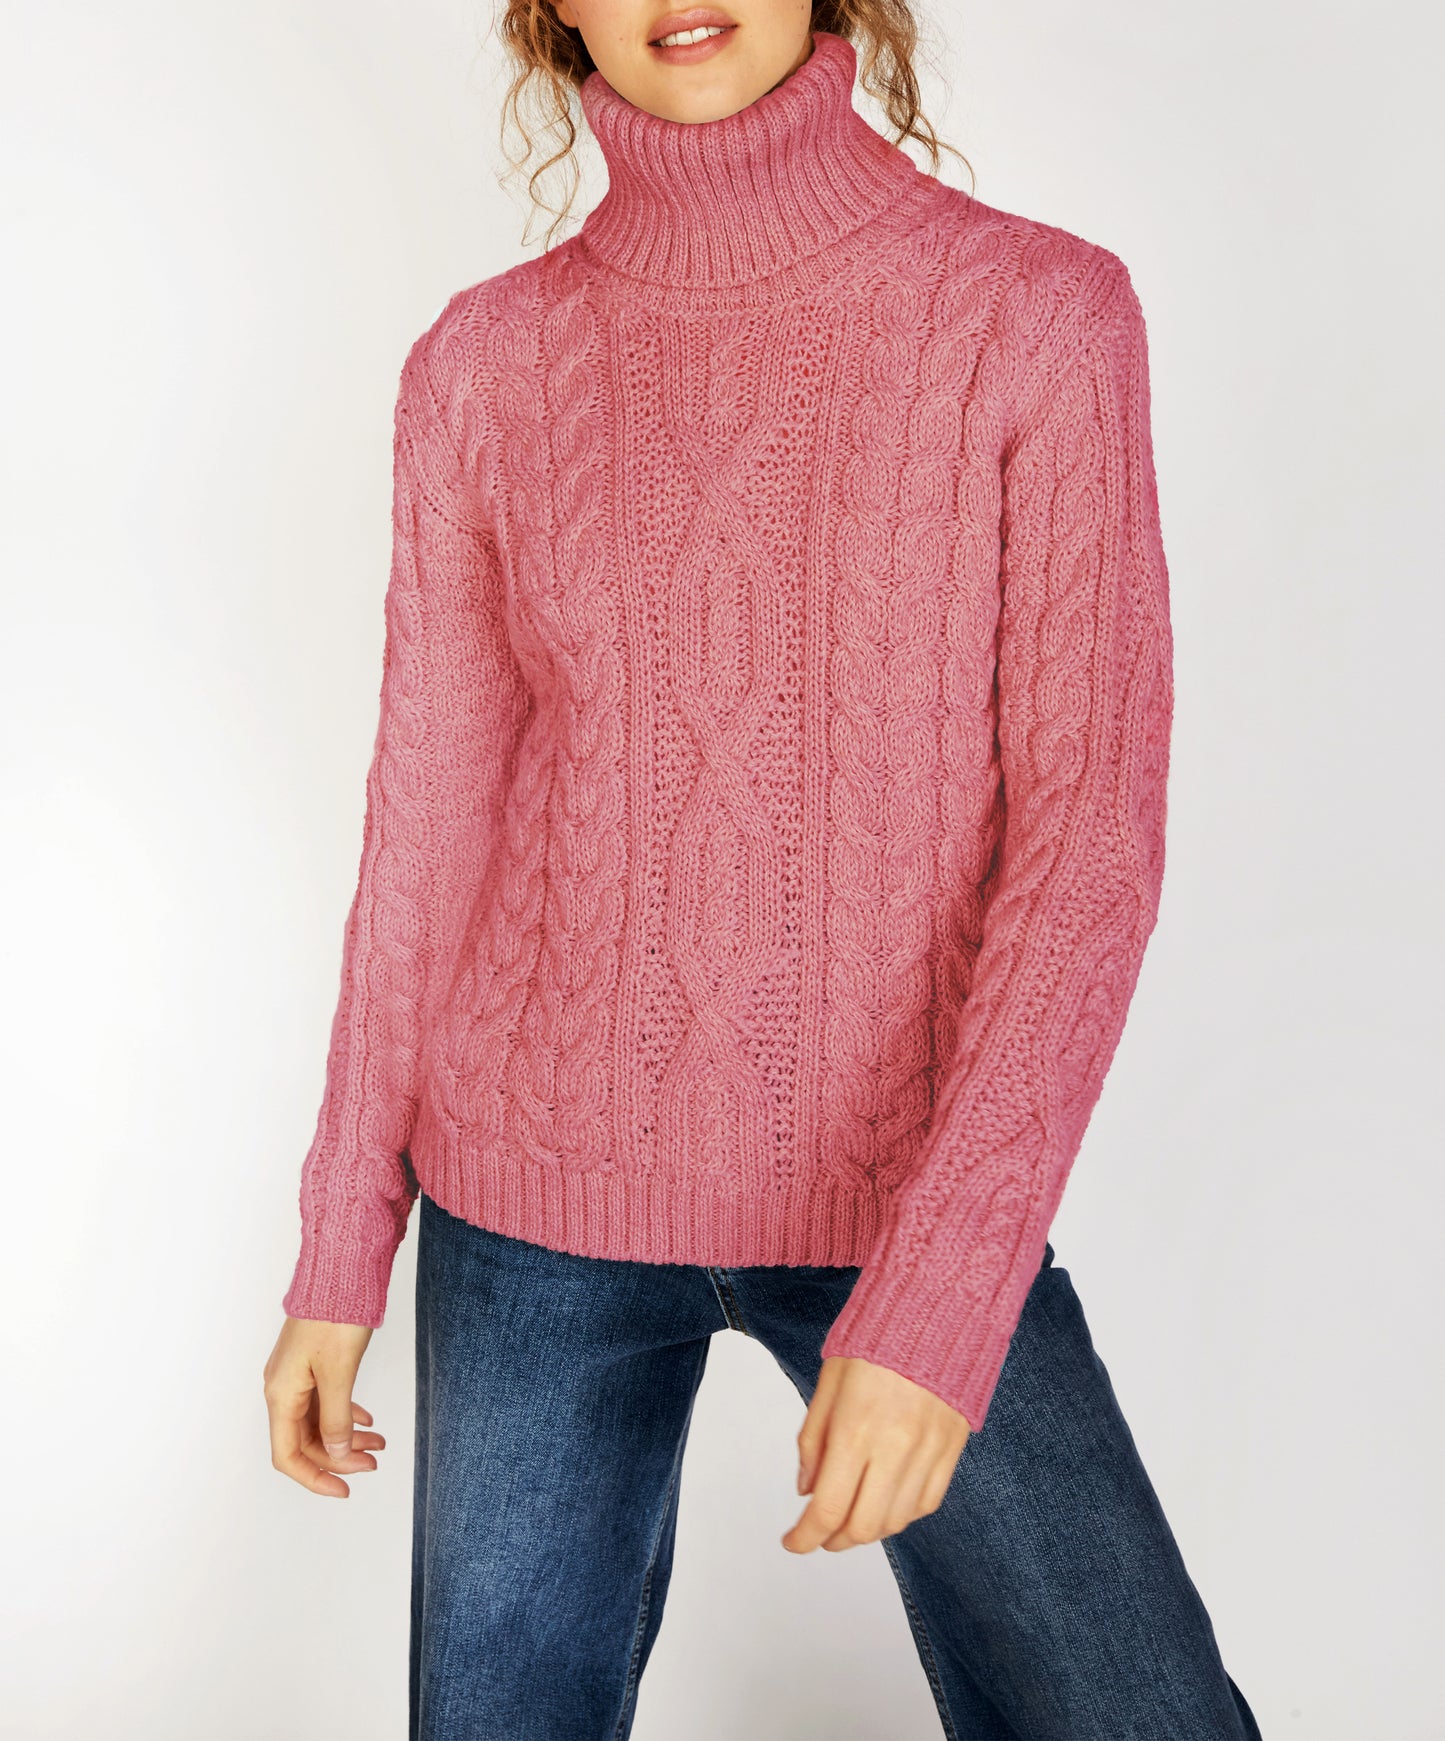 IrelandsEye Knitwear Juniper Aran Polo Neck Rosa Pink